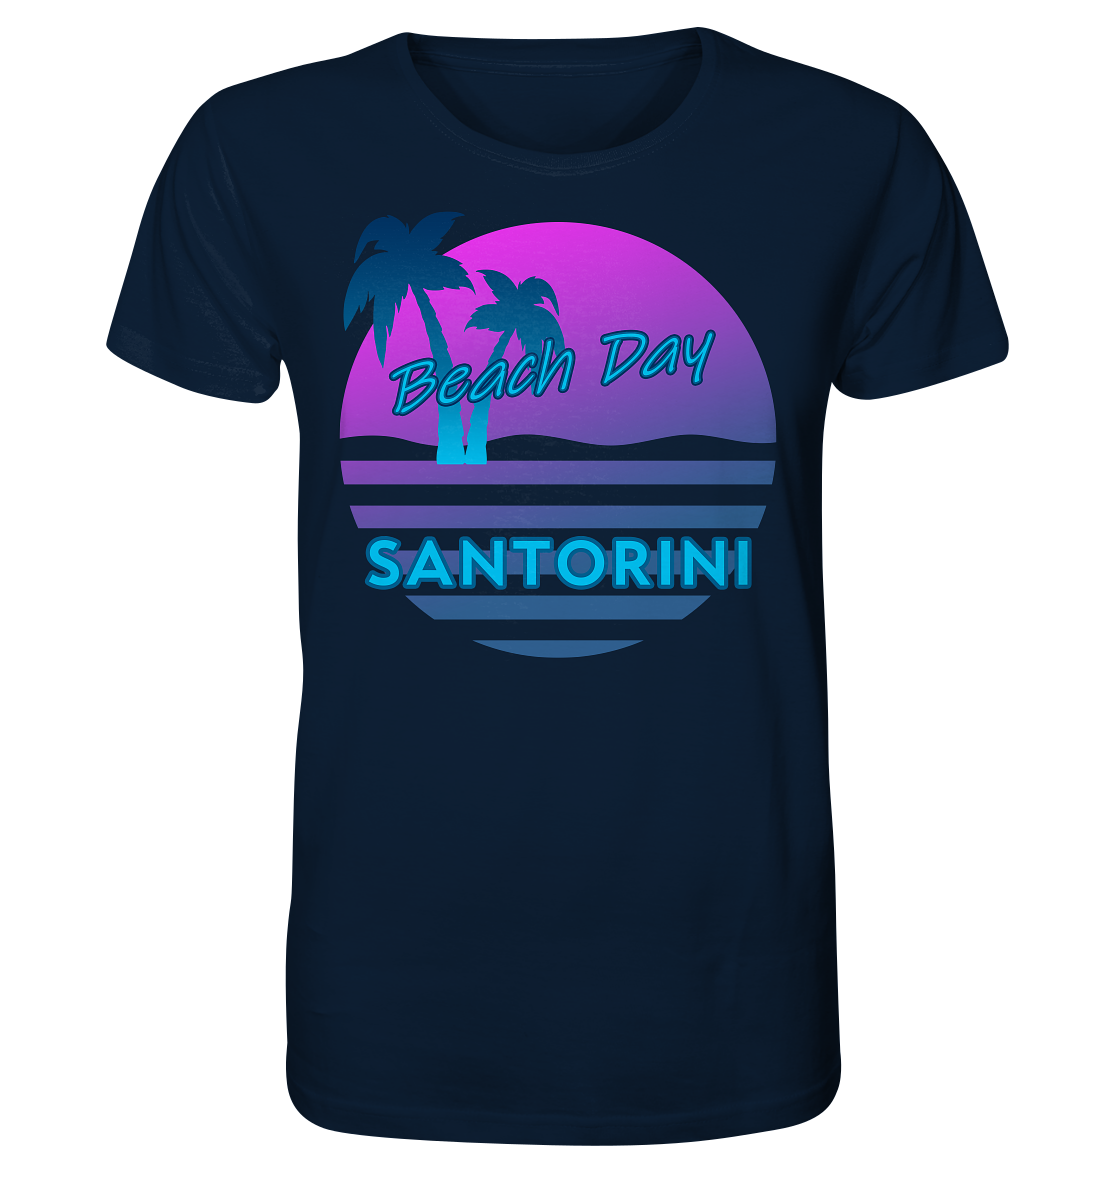 Beach Day Santorini - Organic Shirt